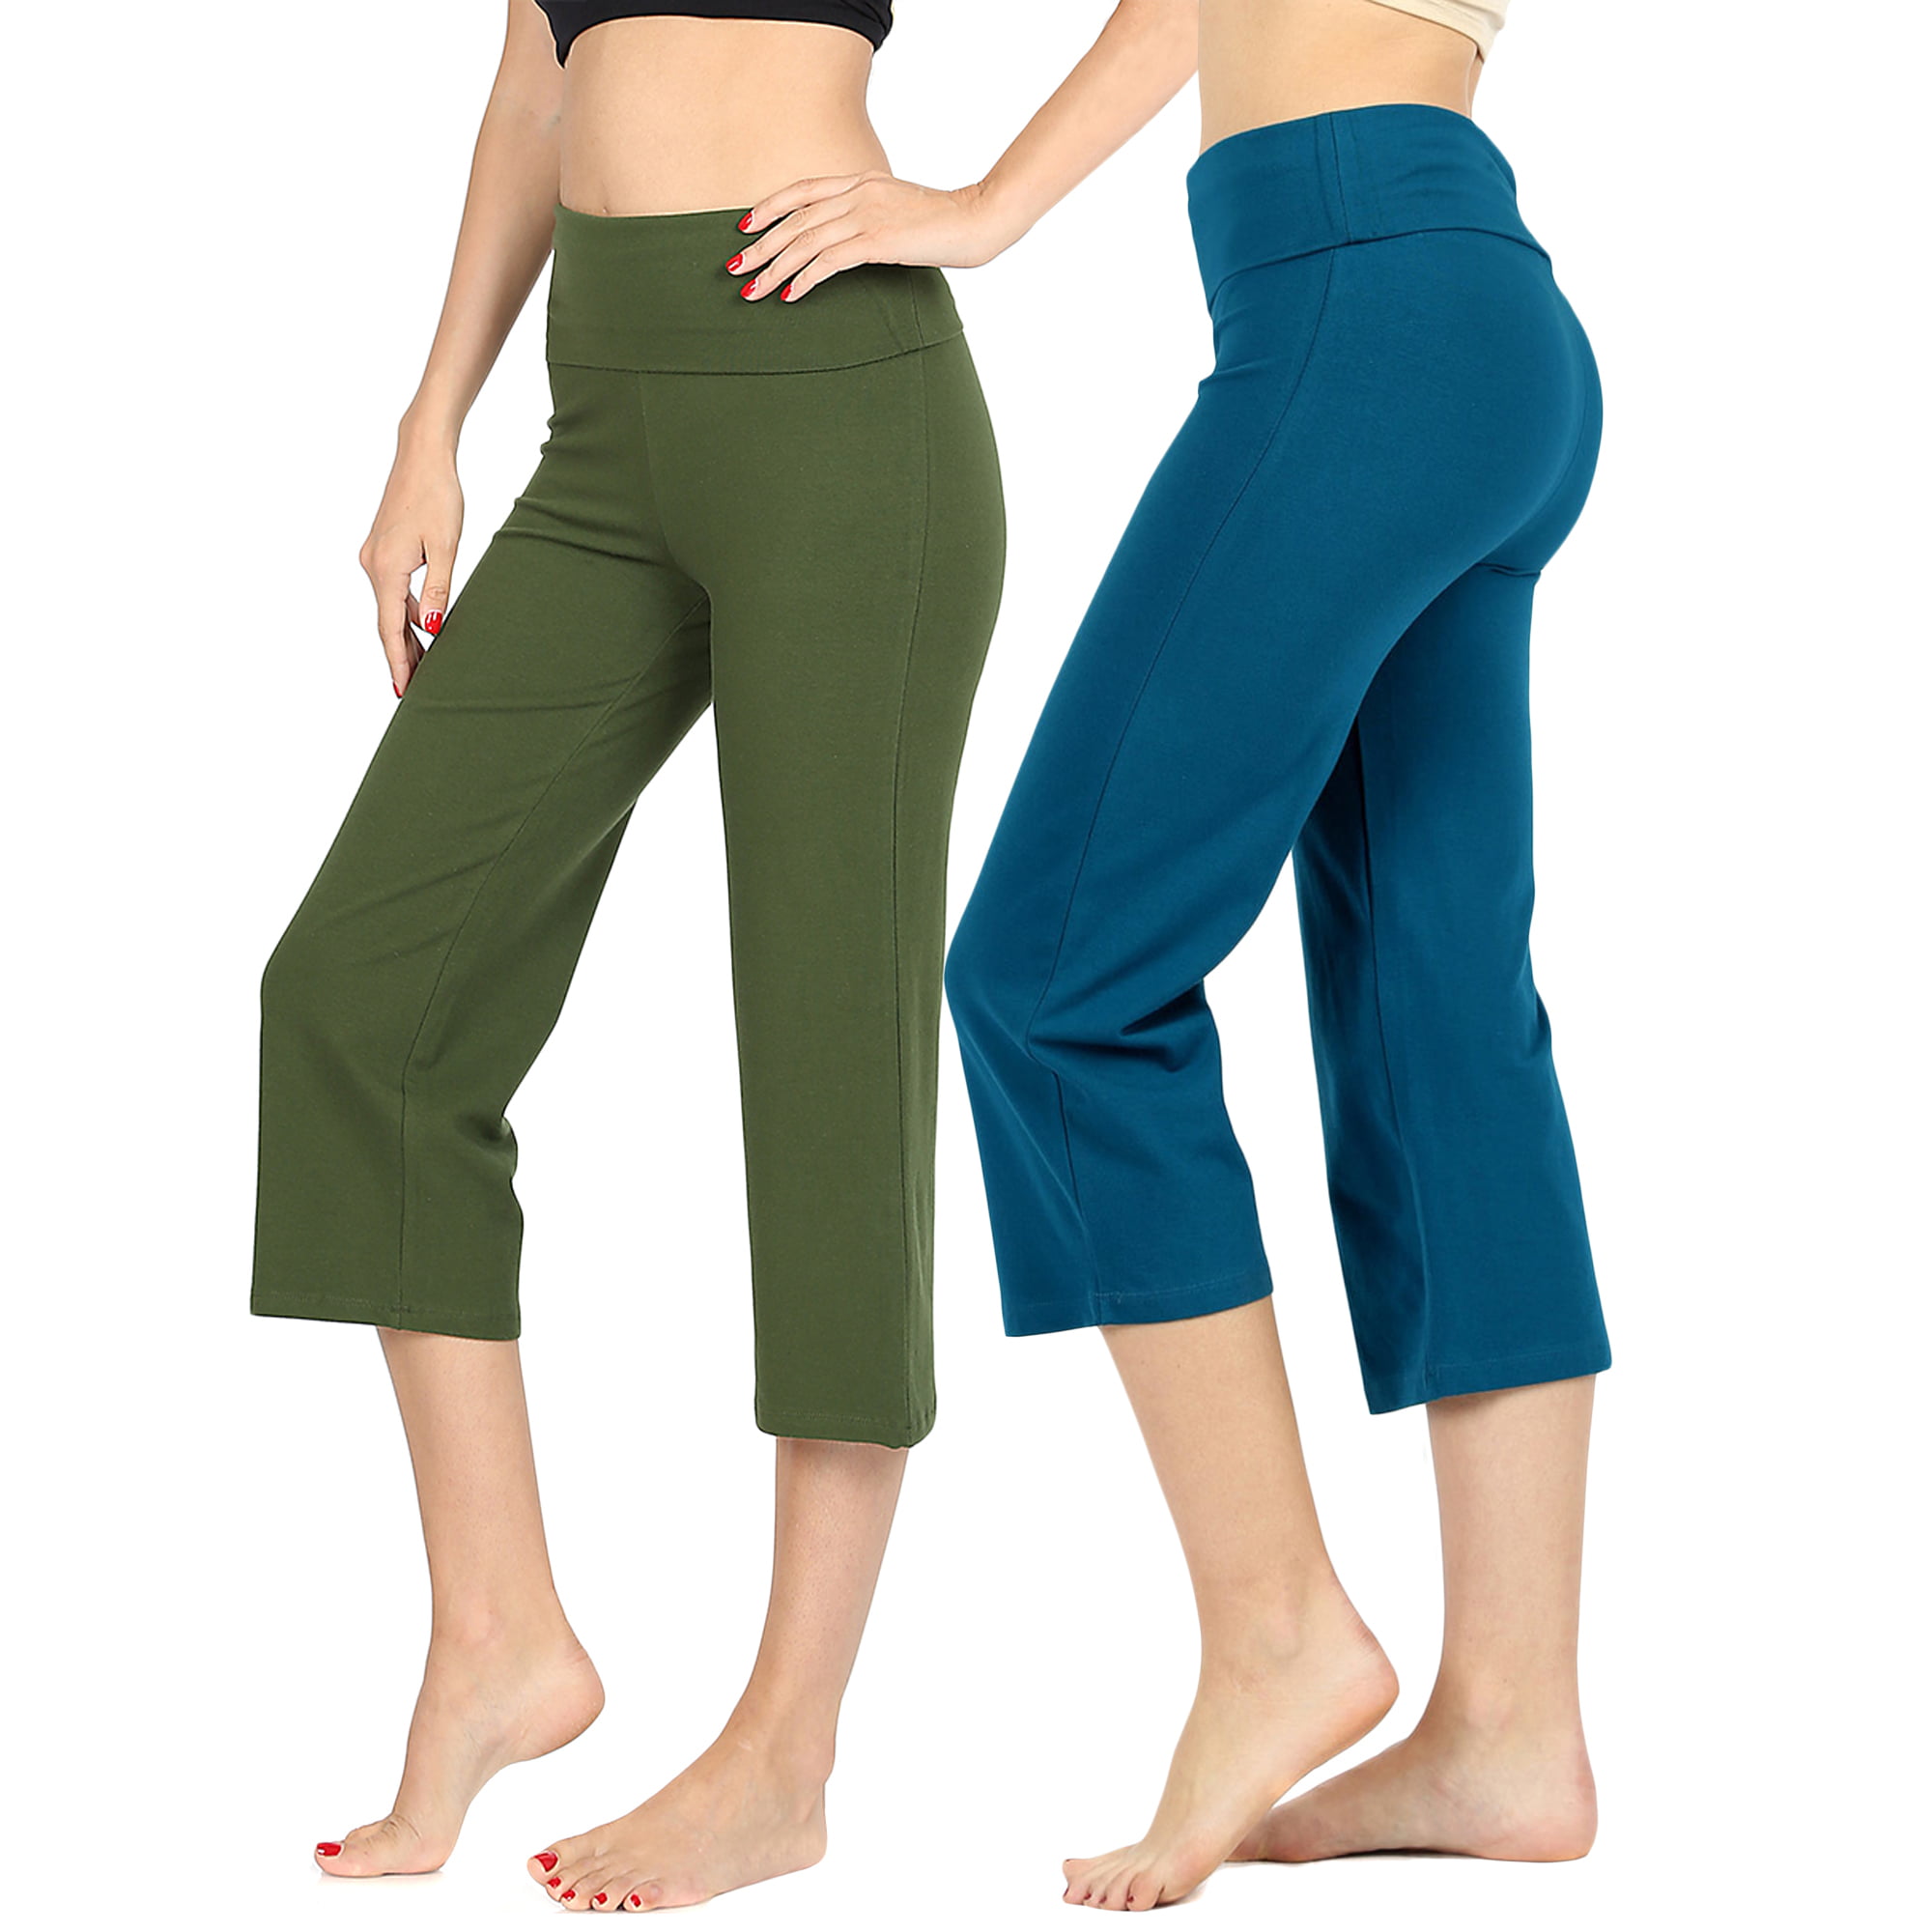 Women S Cotton Fold Over Capri Lounge Yoga Pants S 3xl